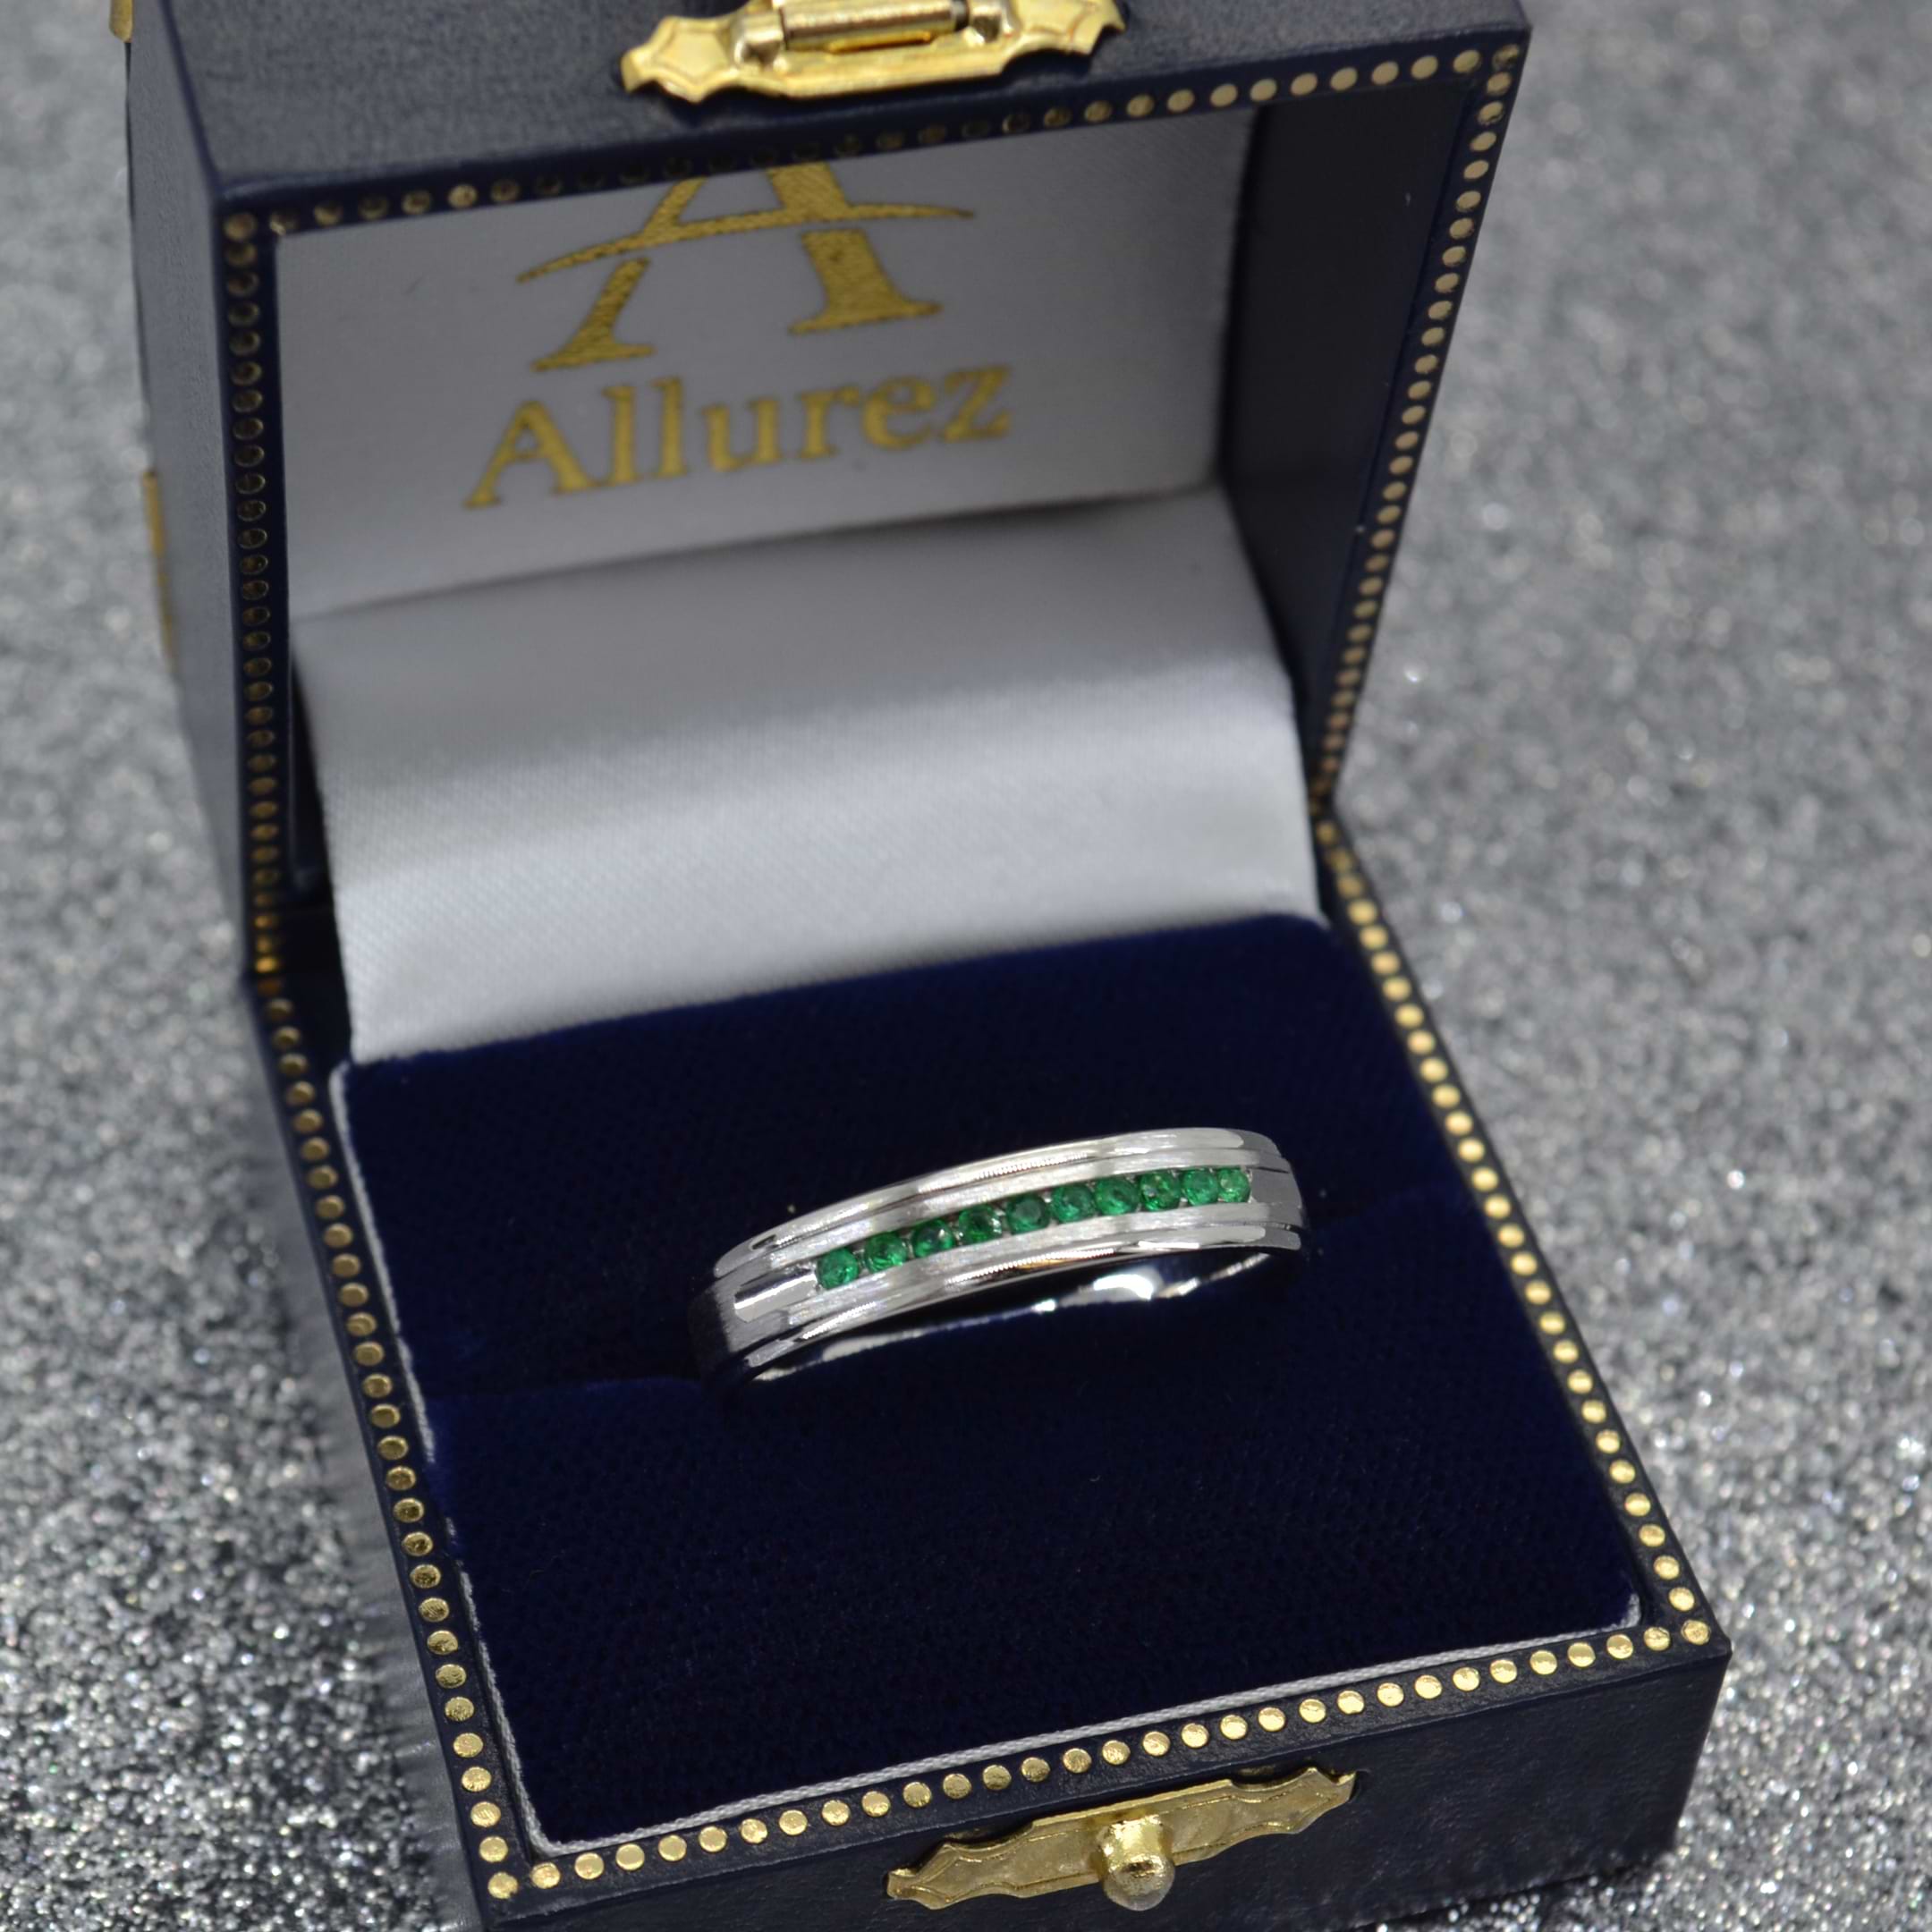 Men's Channel Set Emerald Ring Wedding Band 18k White Gold (0.25ct)